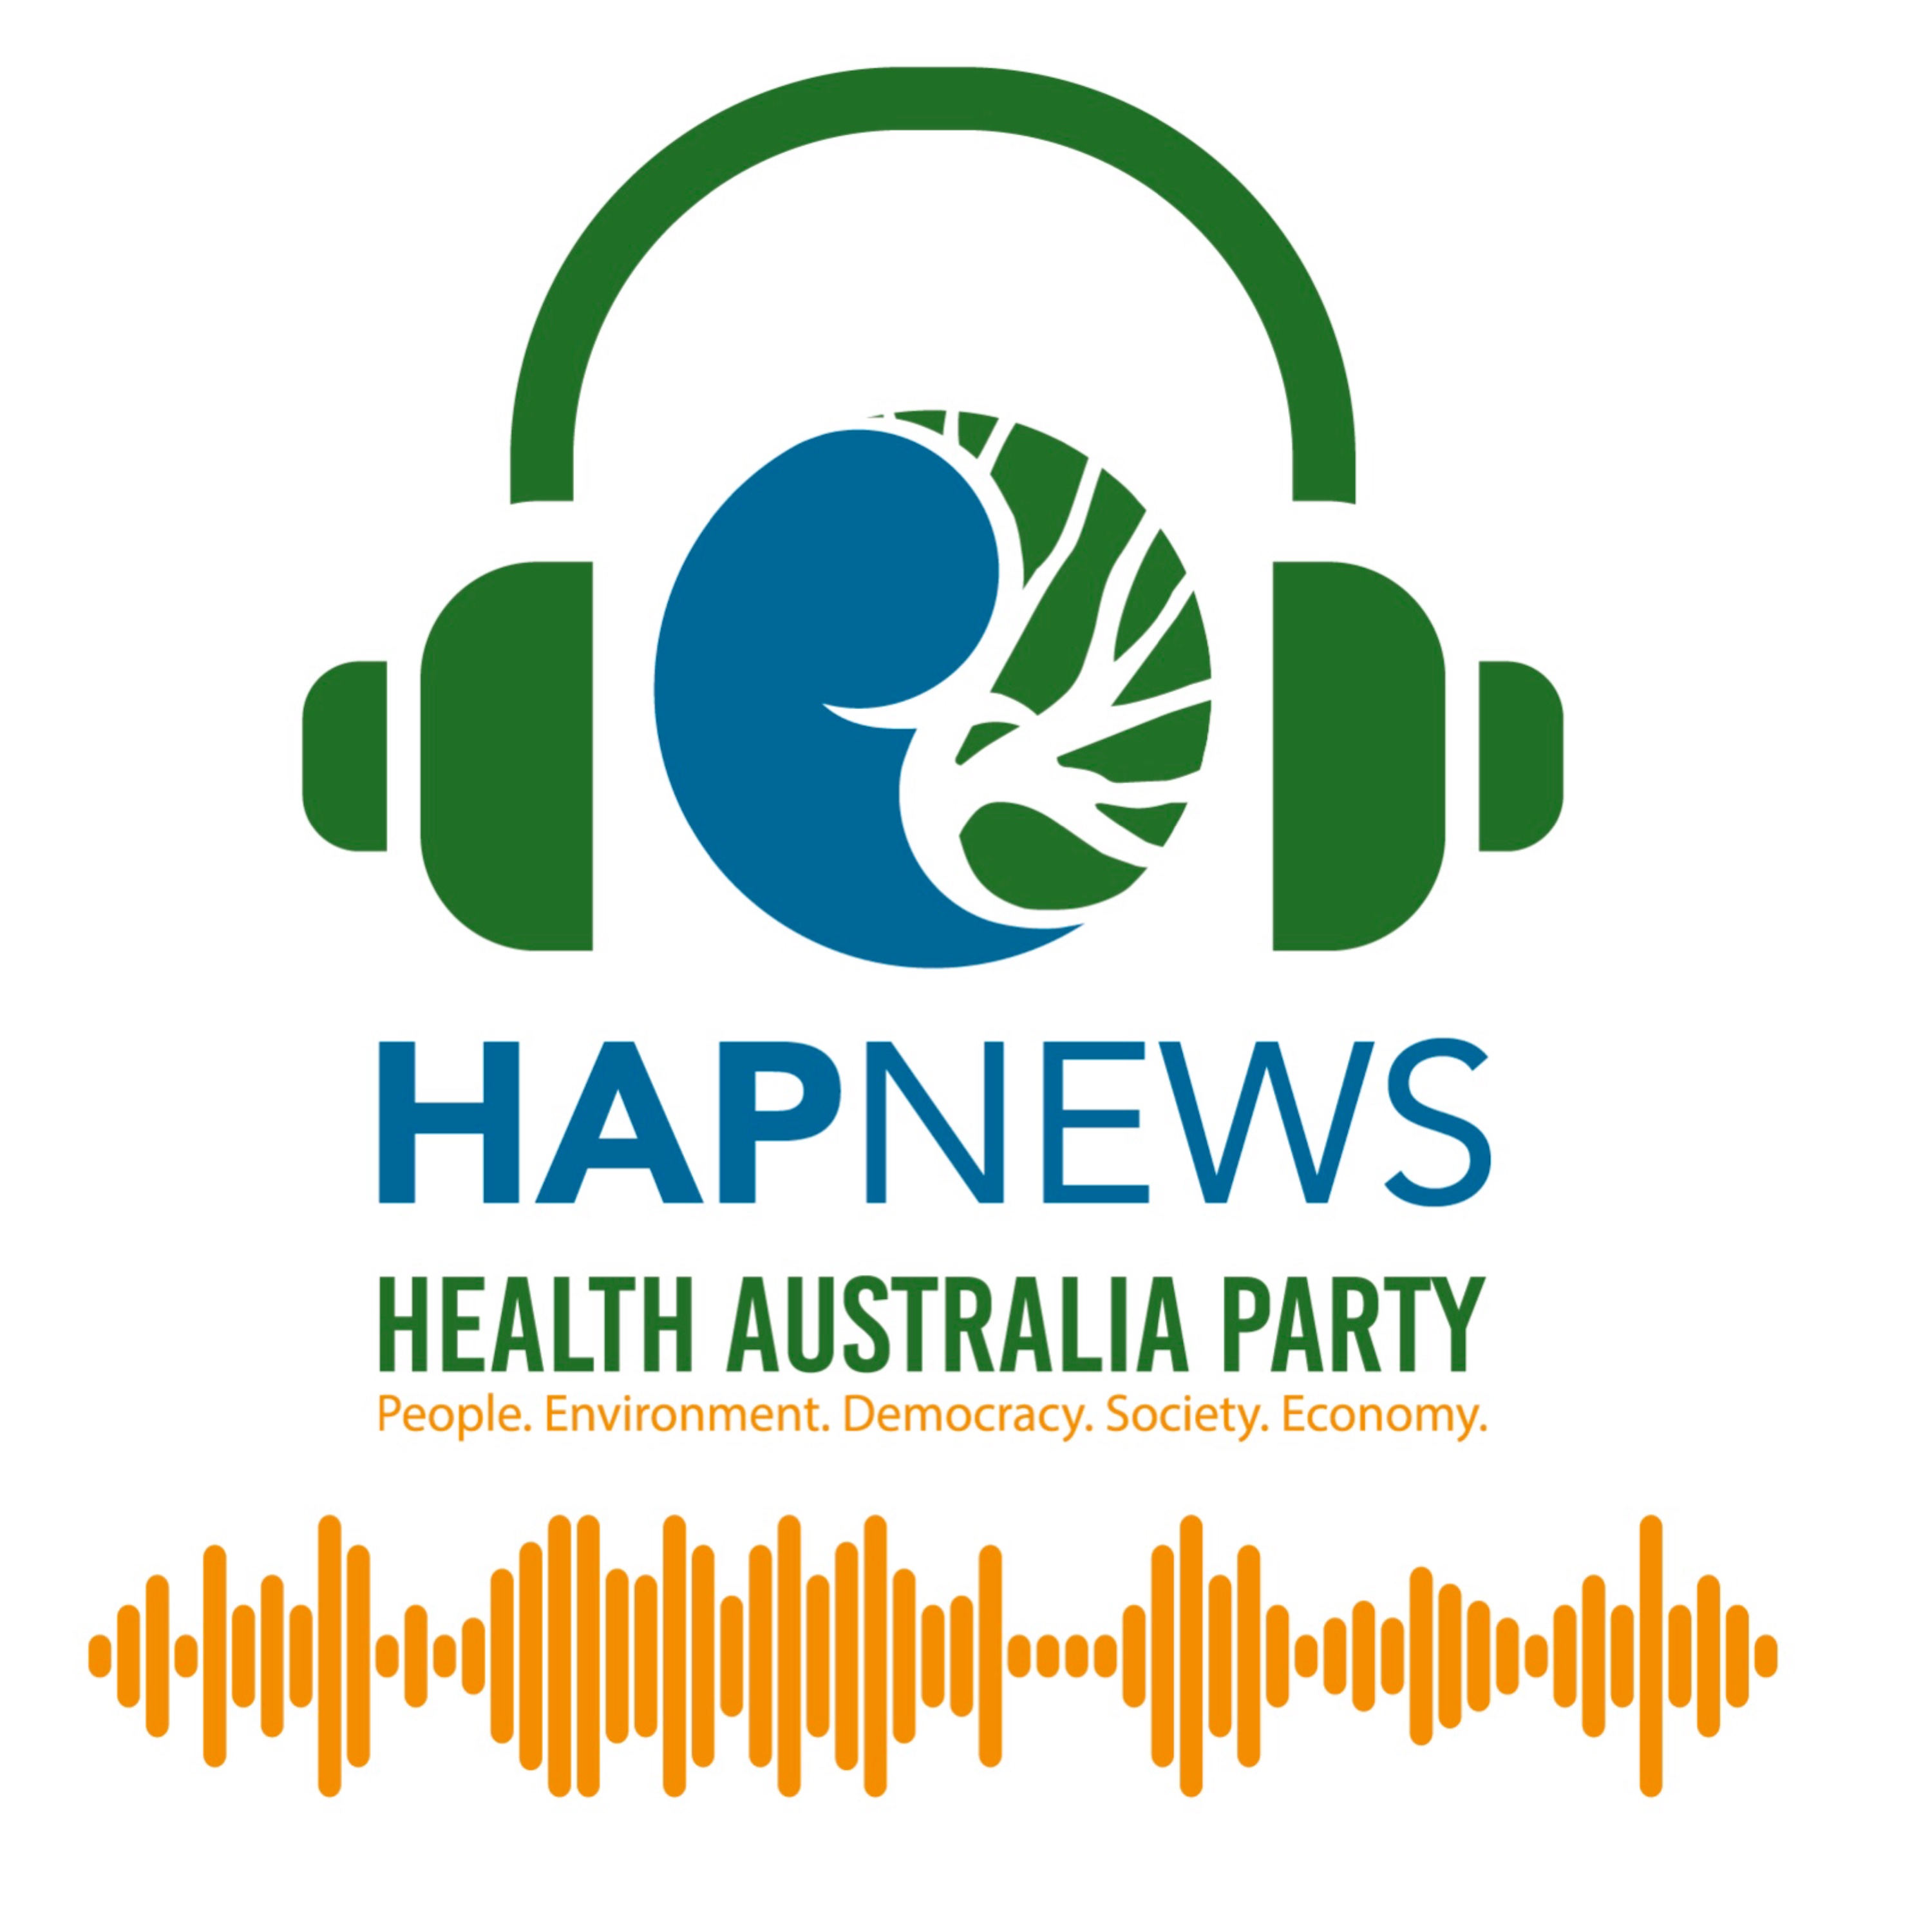 Health Australia Party News